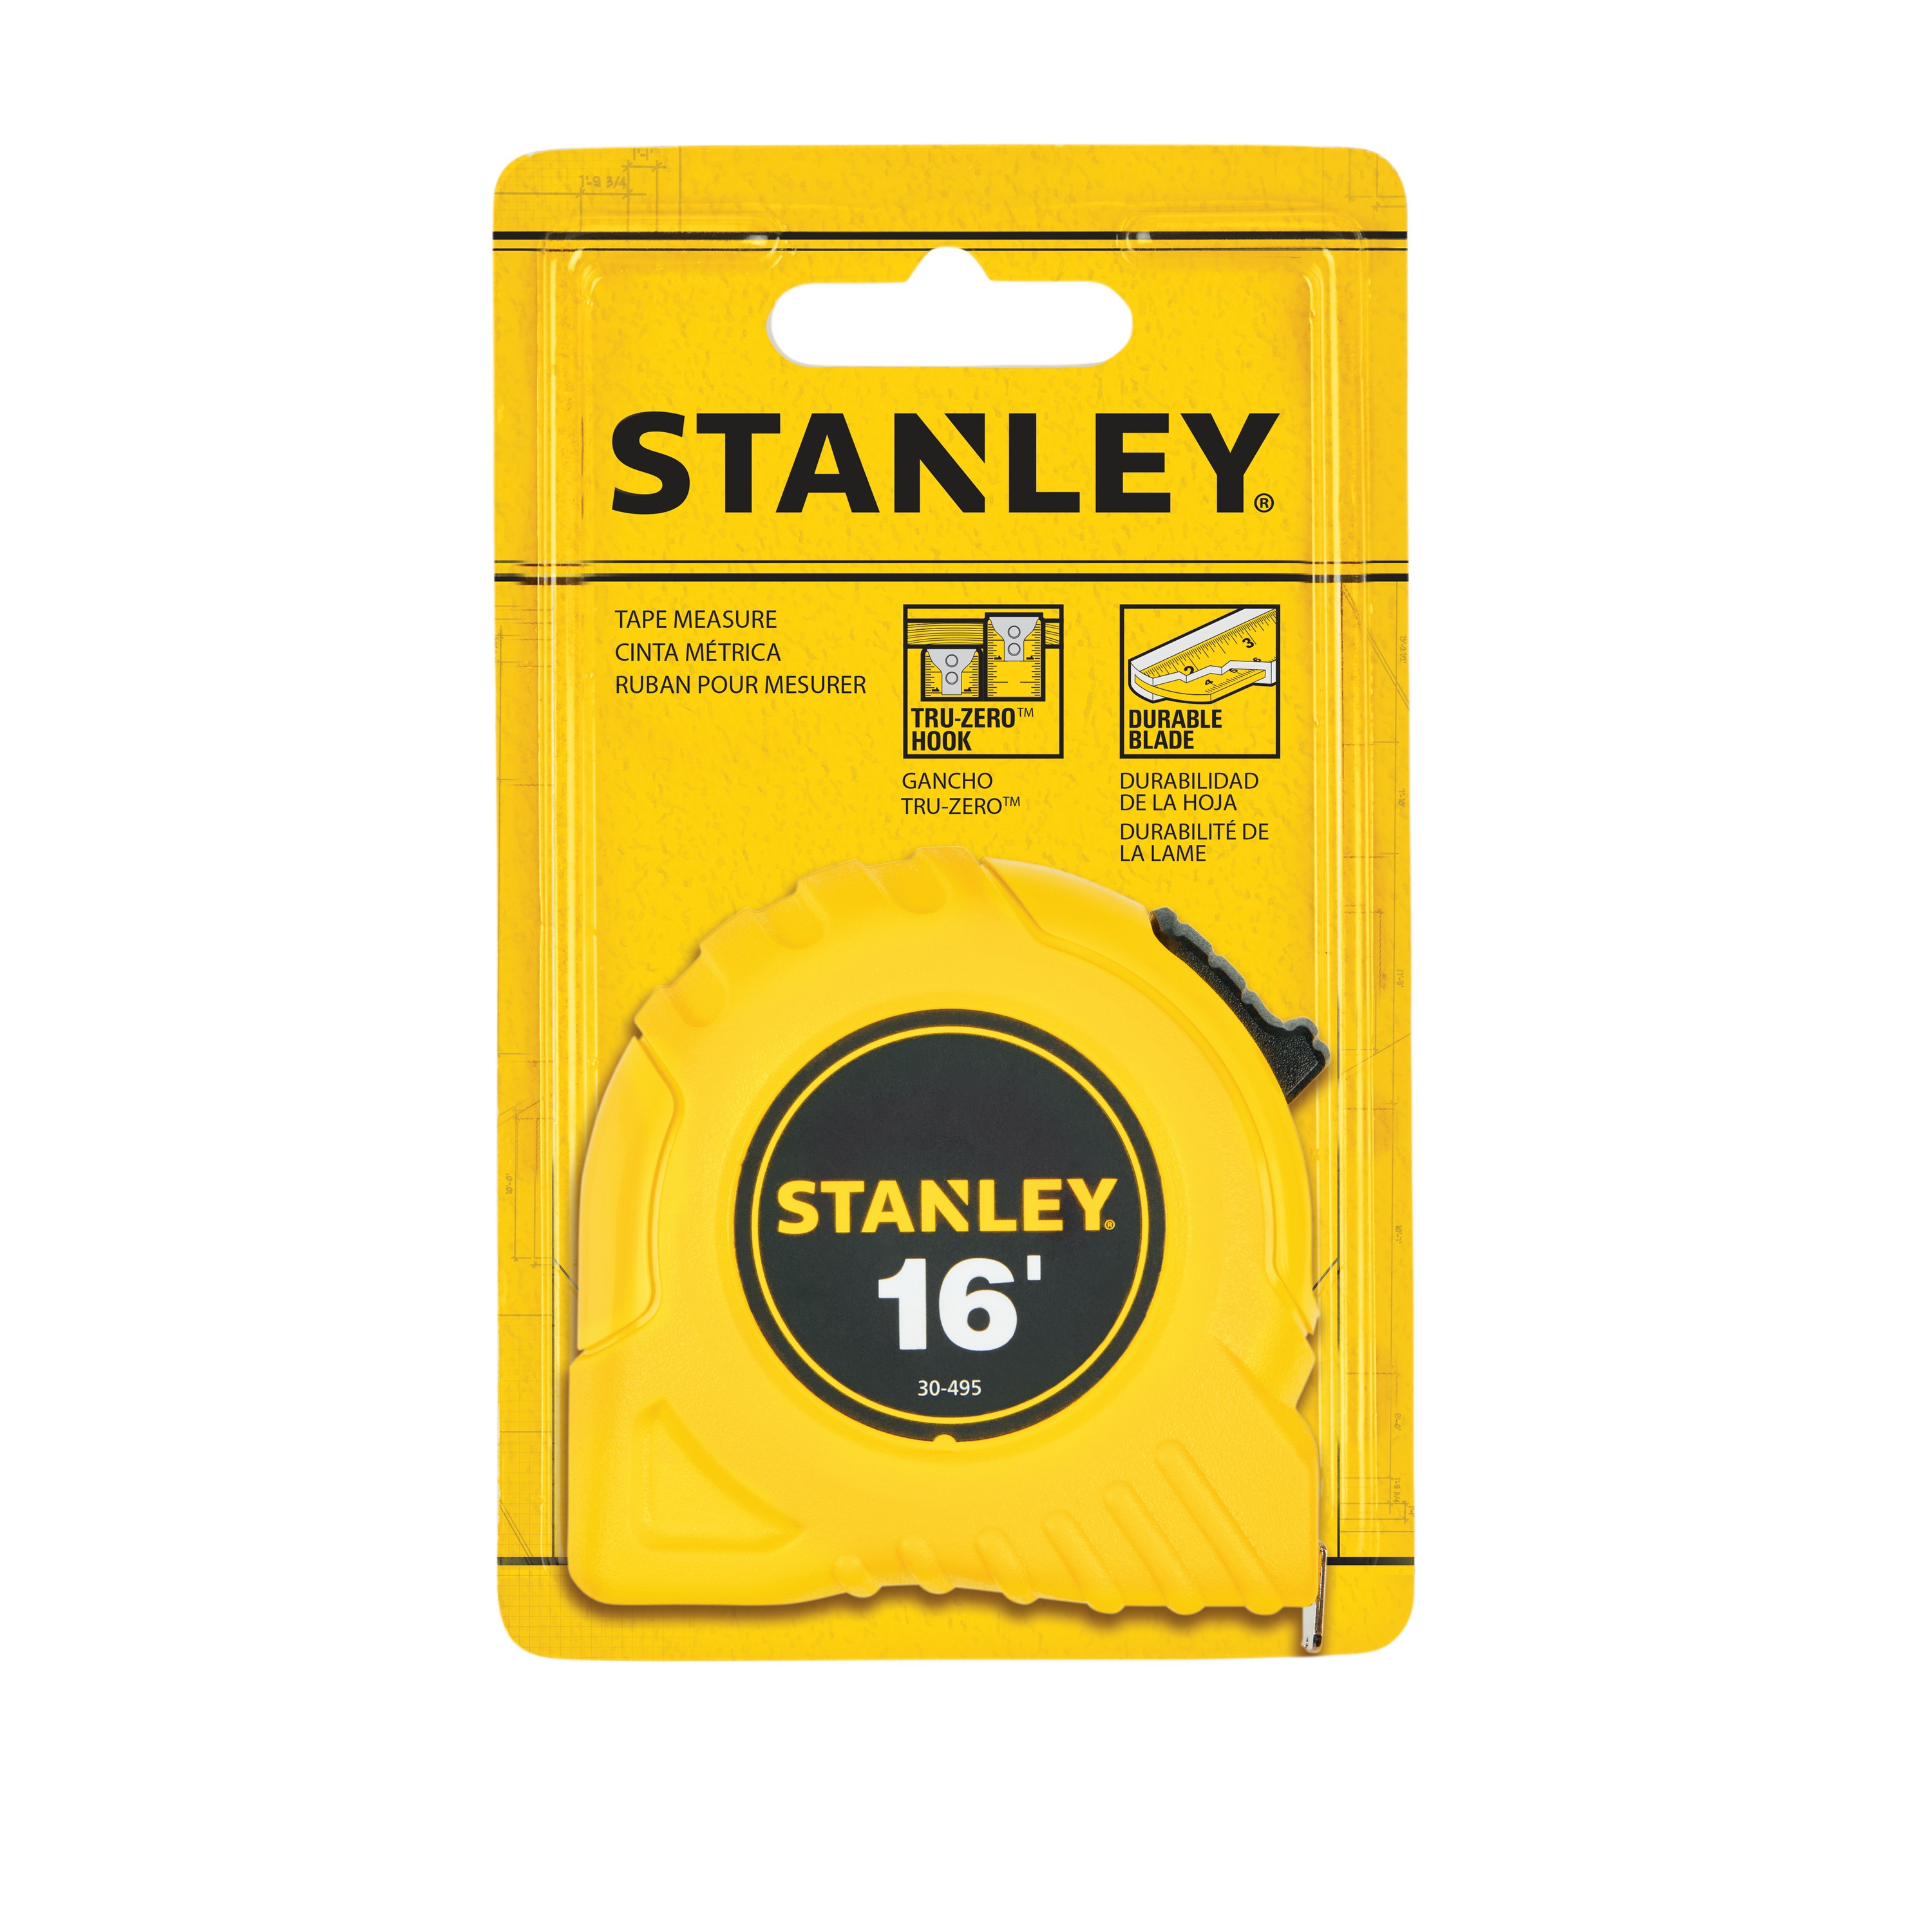 Stanley Tools - 16 ft Tape Measure - 30-495